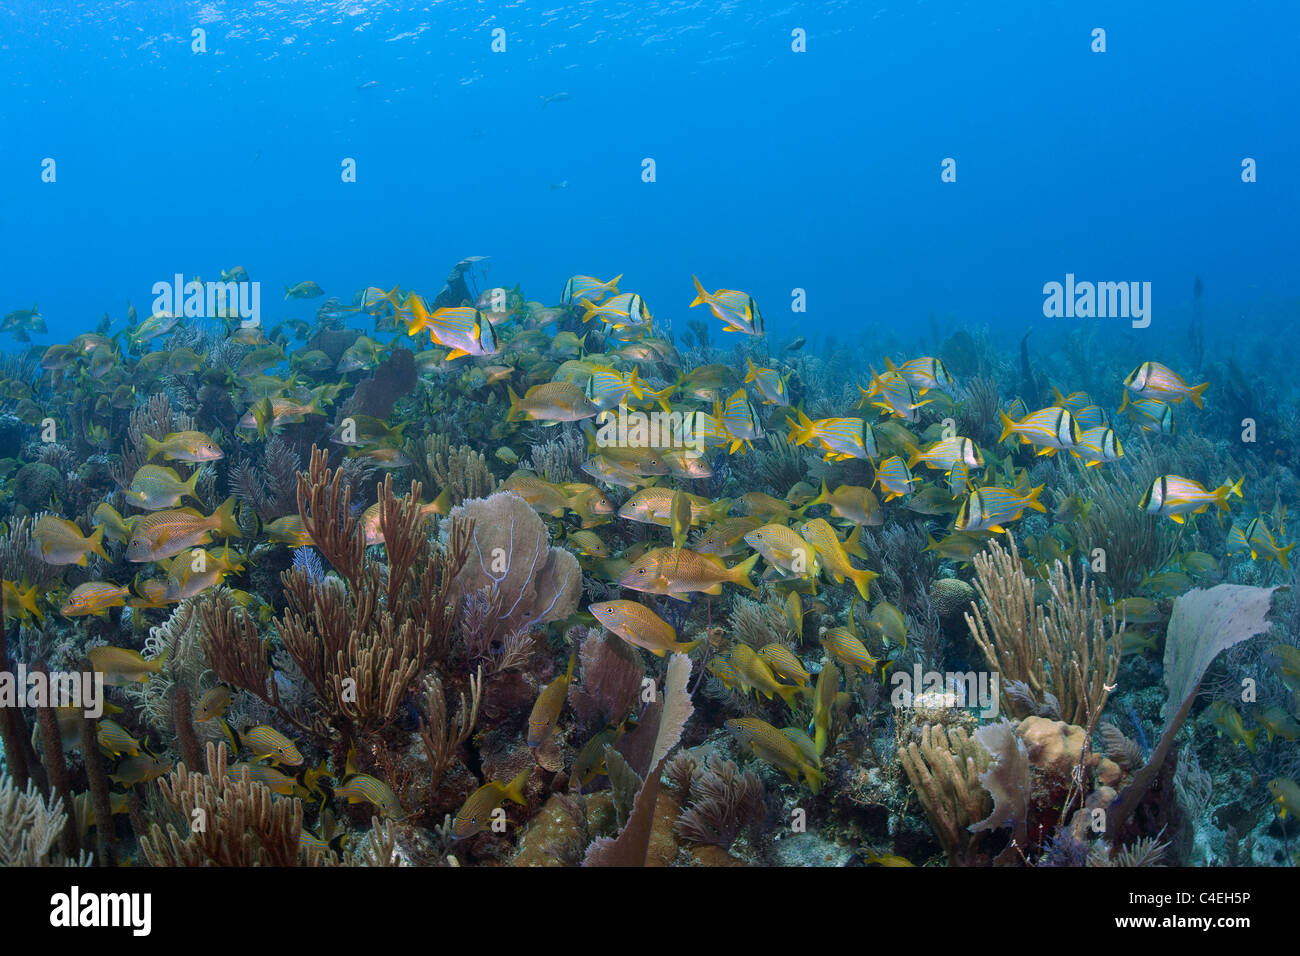 Schools of tropical reef fish swim over a coral reef at Jardines de la Reina off the coast of Cuba. Stock Photo